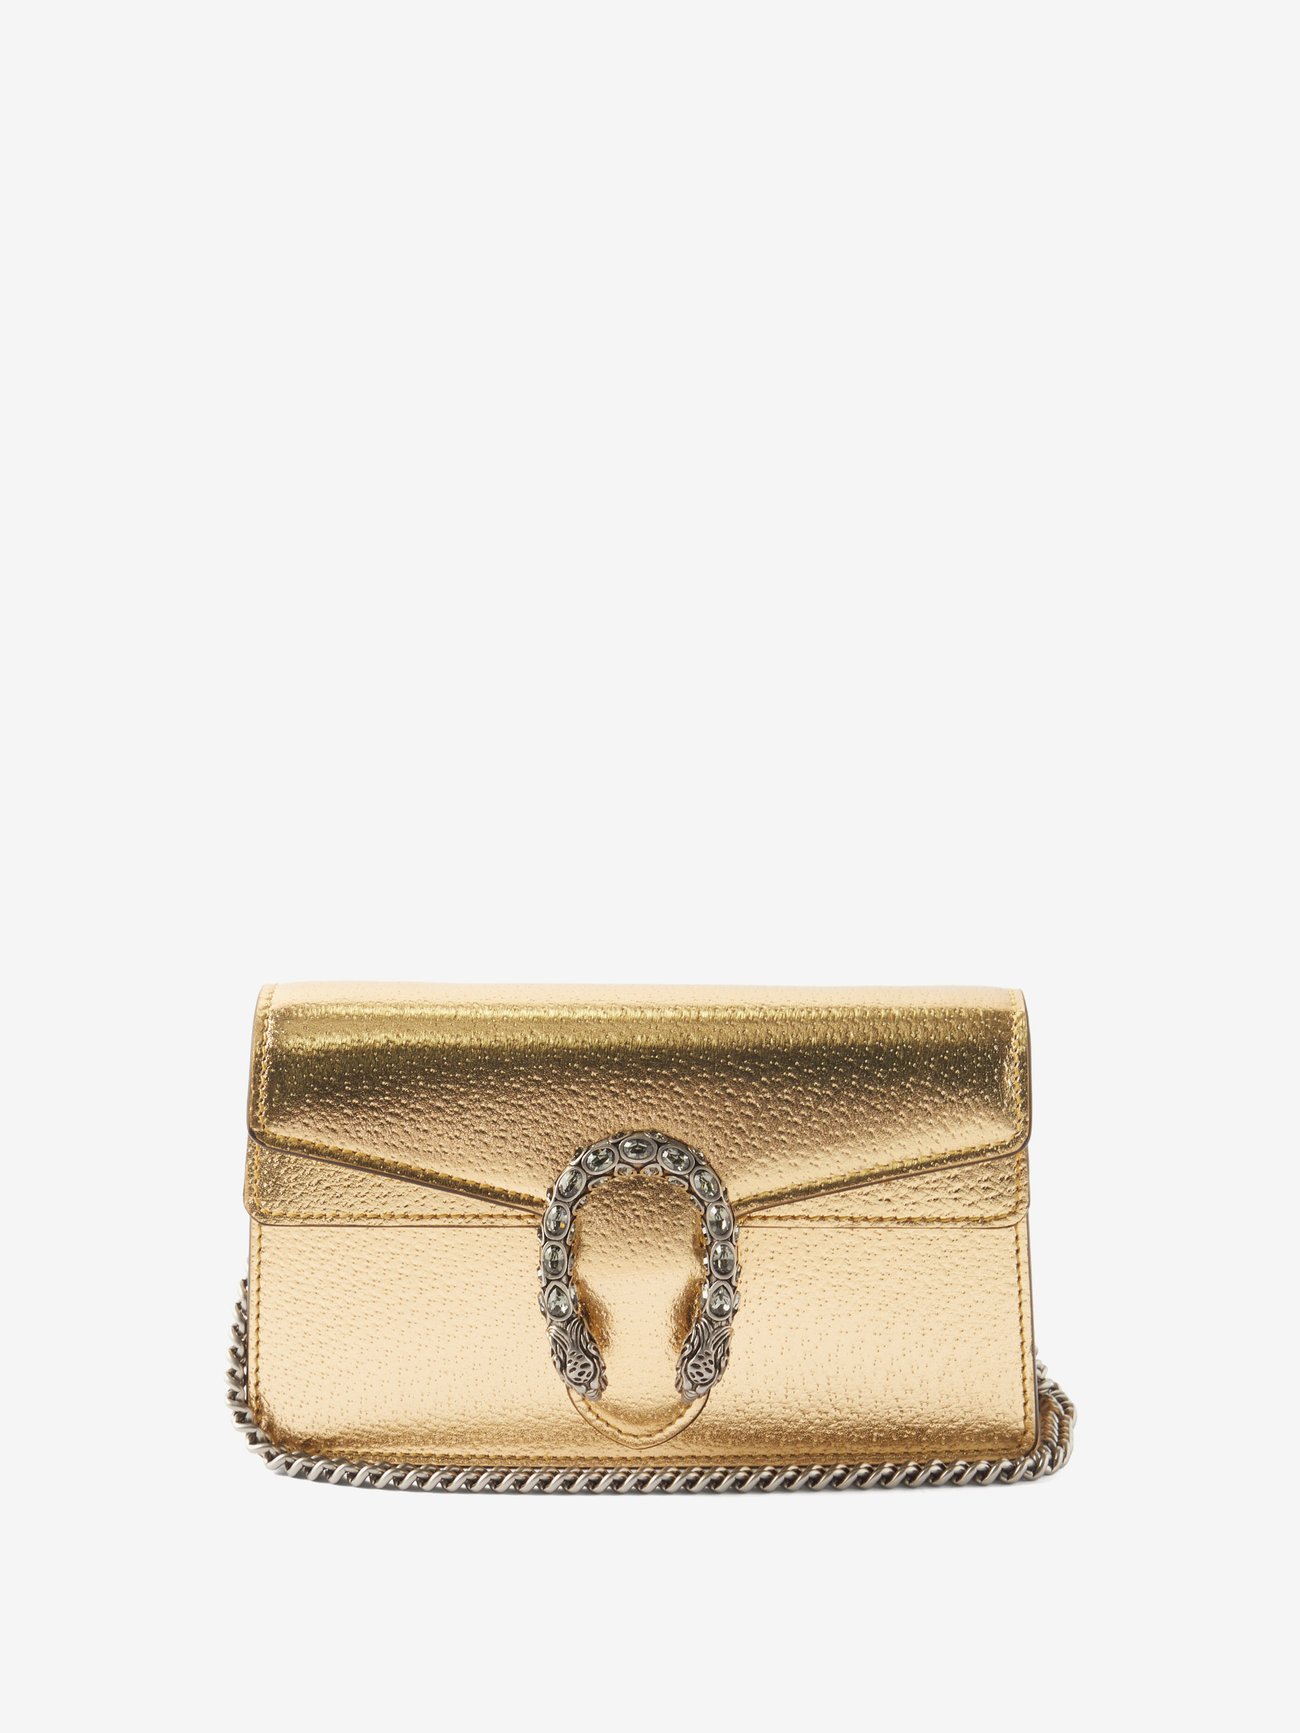 Gucci Dionysus Super Mini Shoulder Bag In Gold Lamé Leather